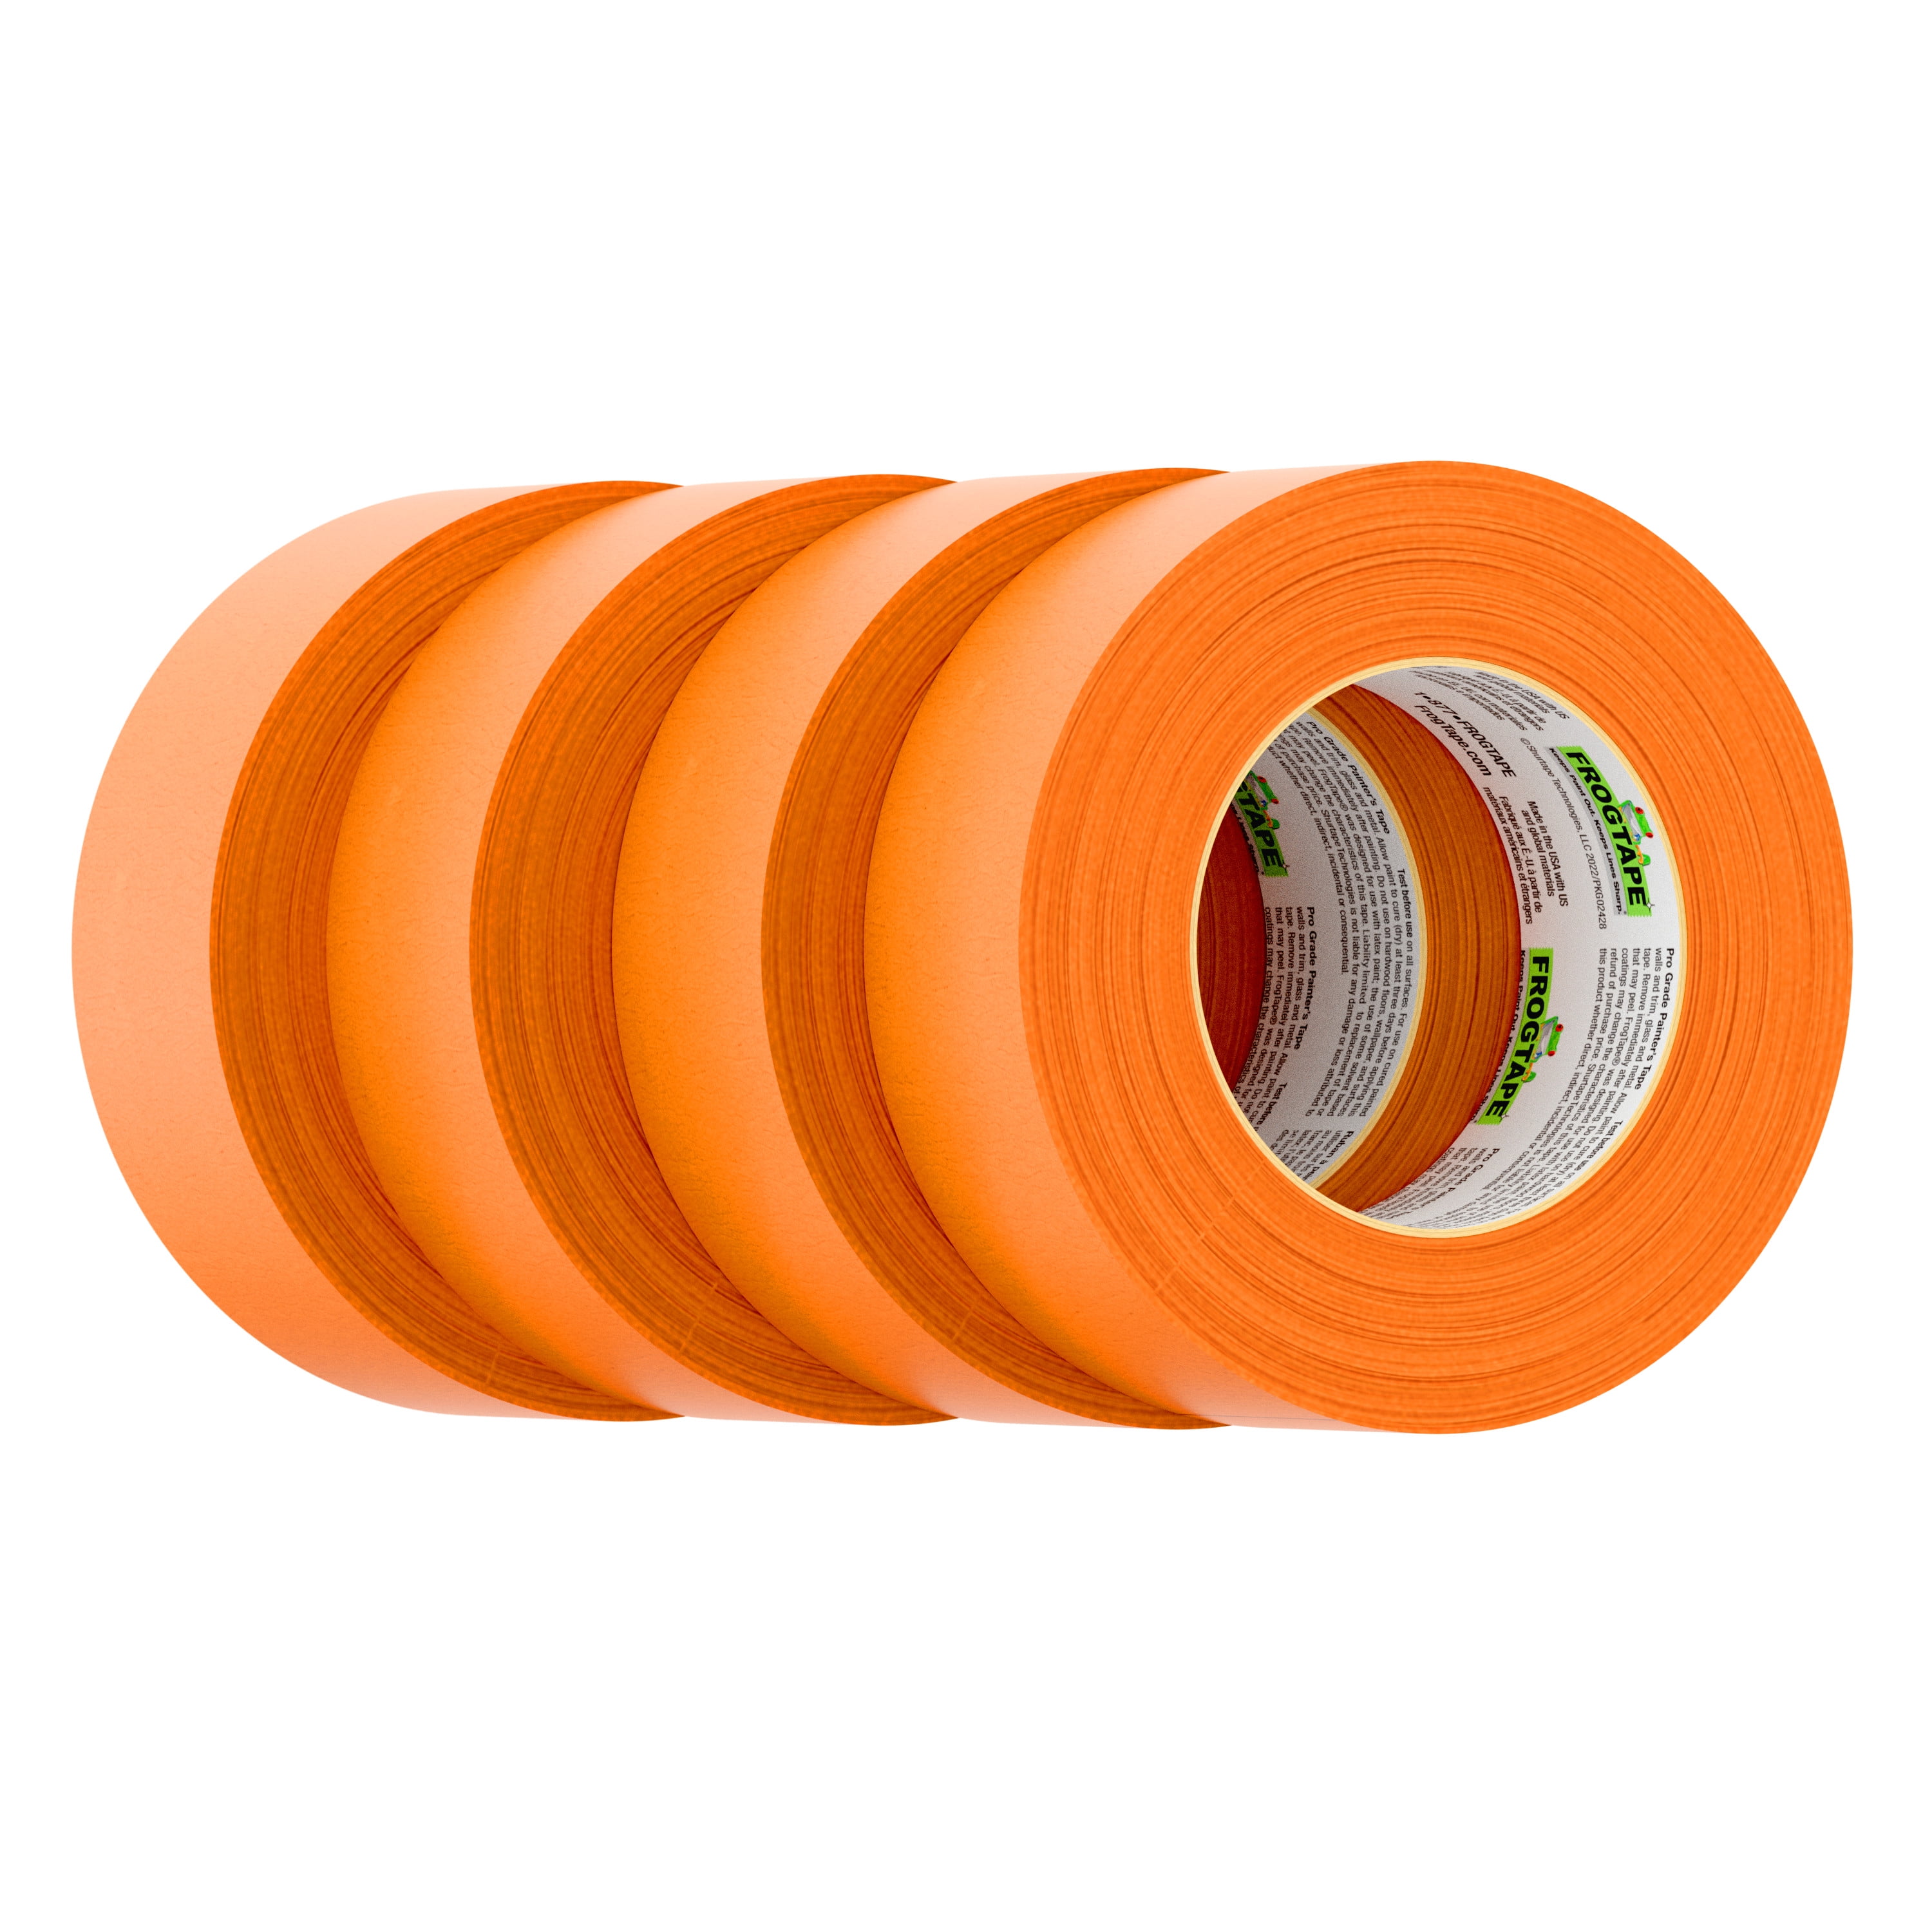 FrogTape Pro Grade Orange 1.41 in. x 60 yd. Painter's Tape, 4 Pack 